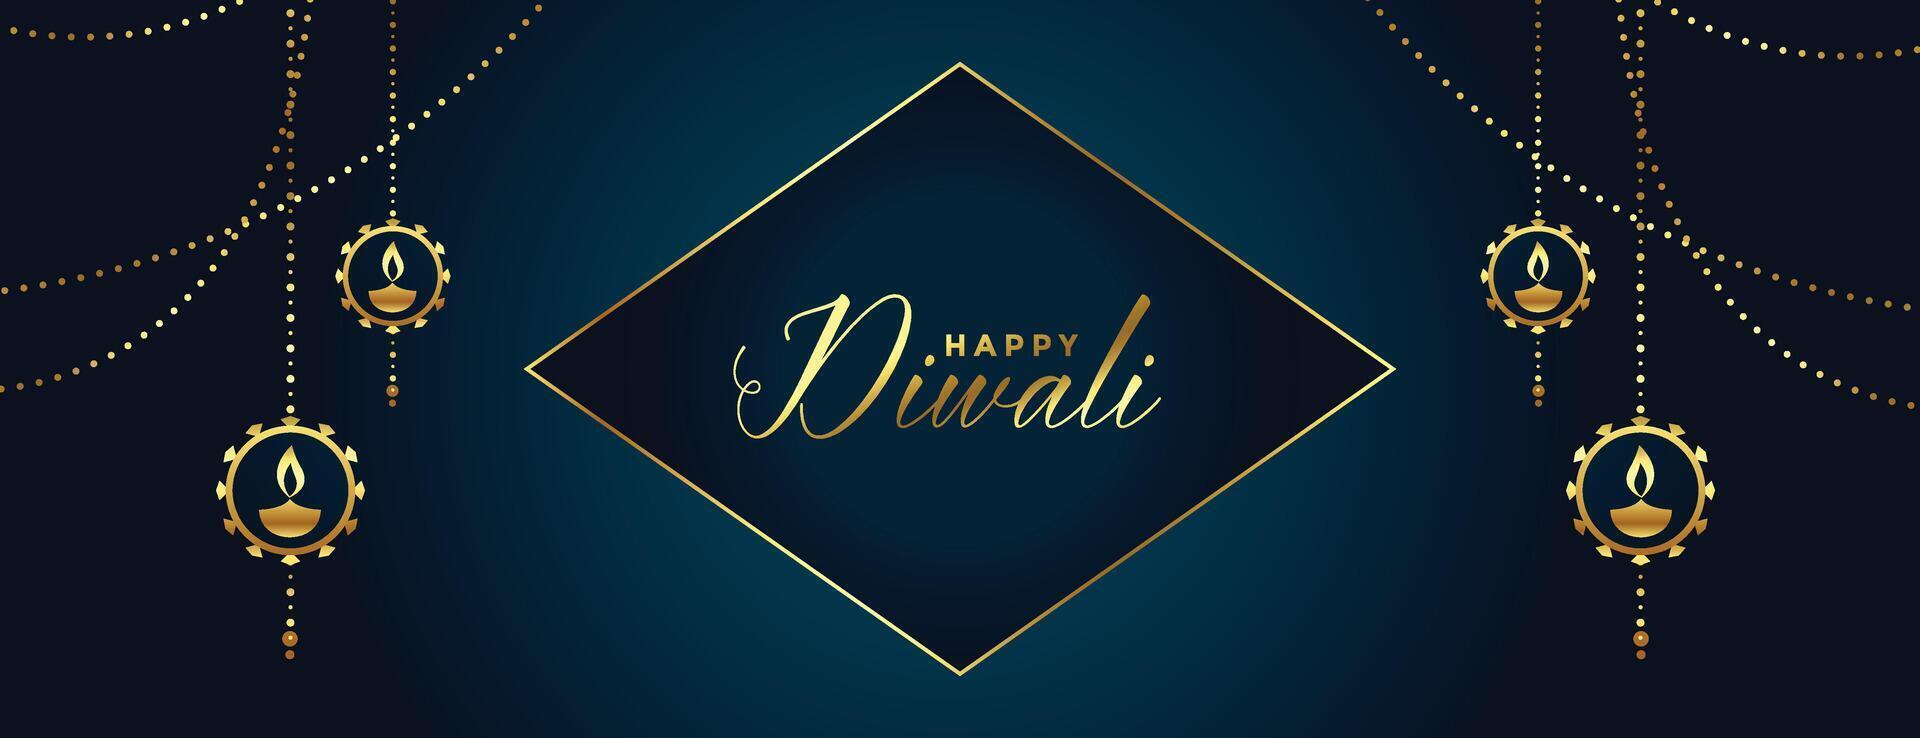 decoratief gelukkig diwali festival achtergrond ontwerp vector